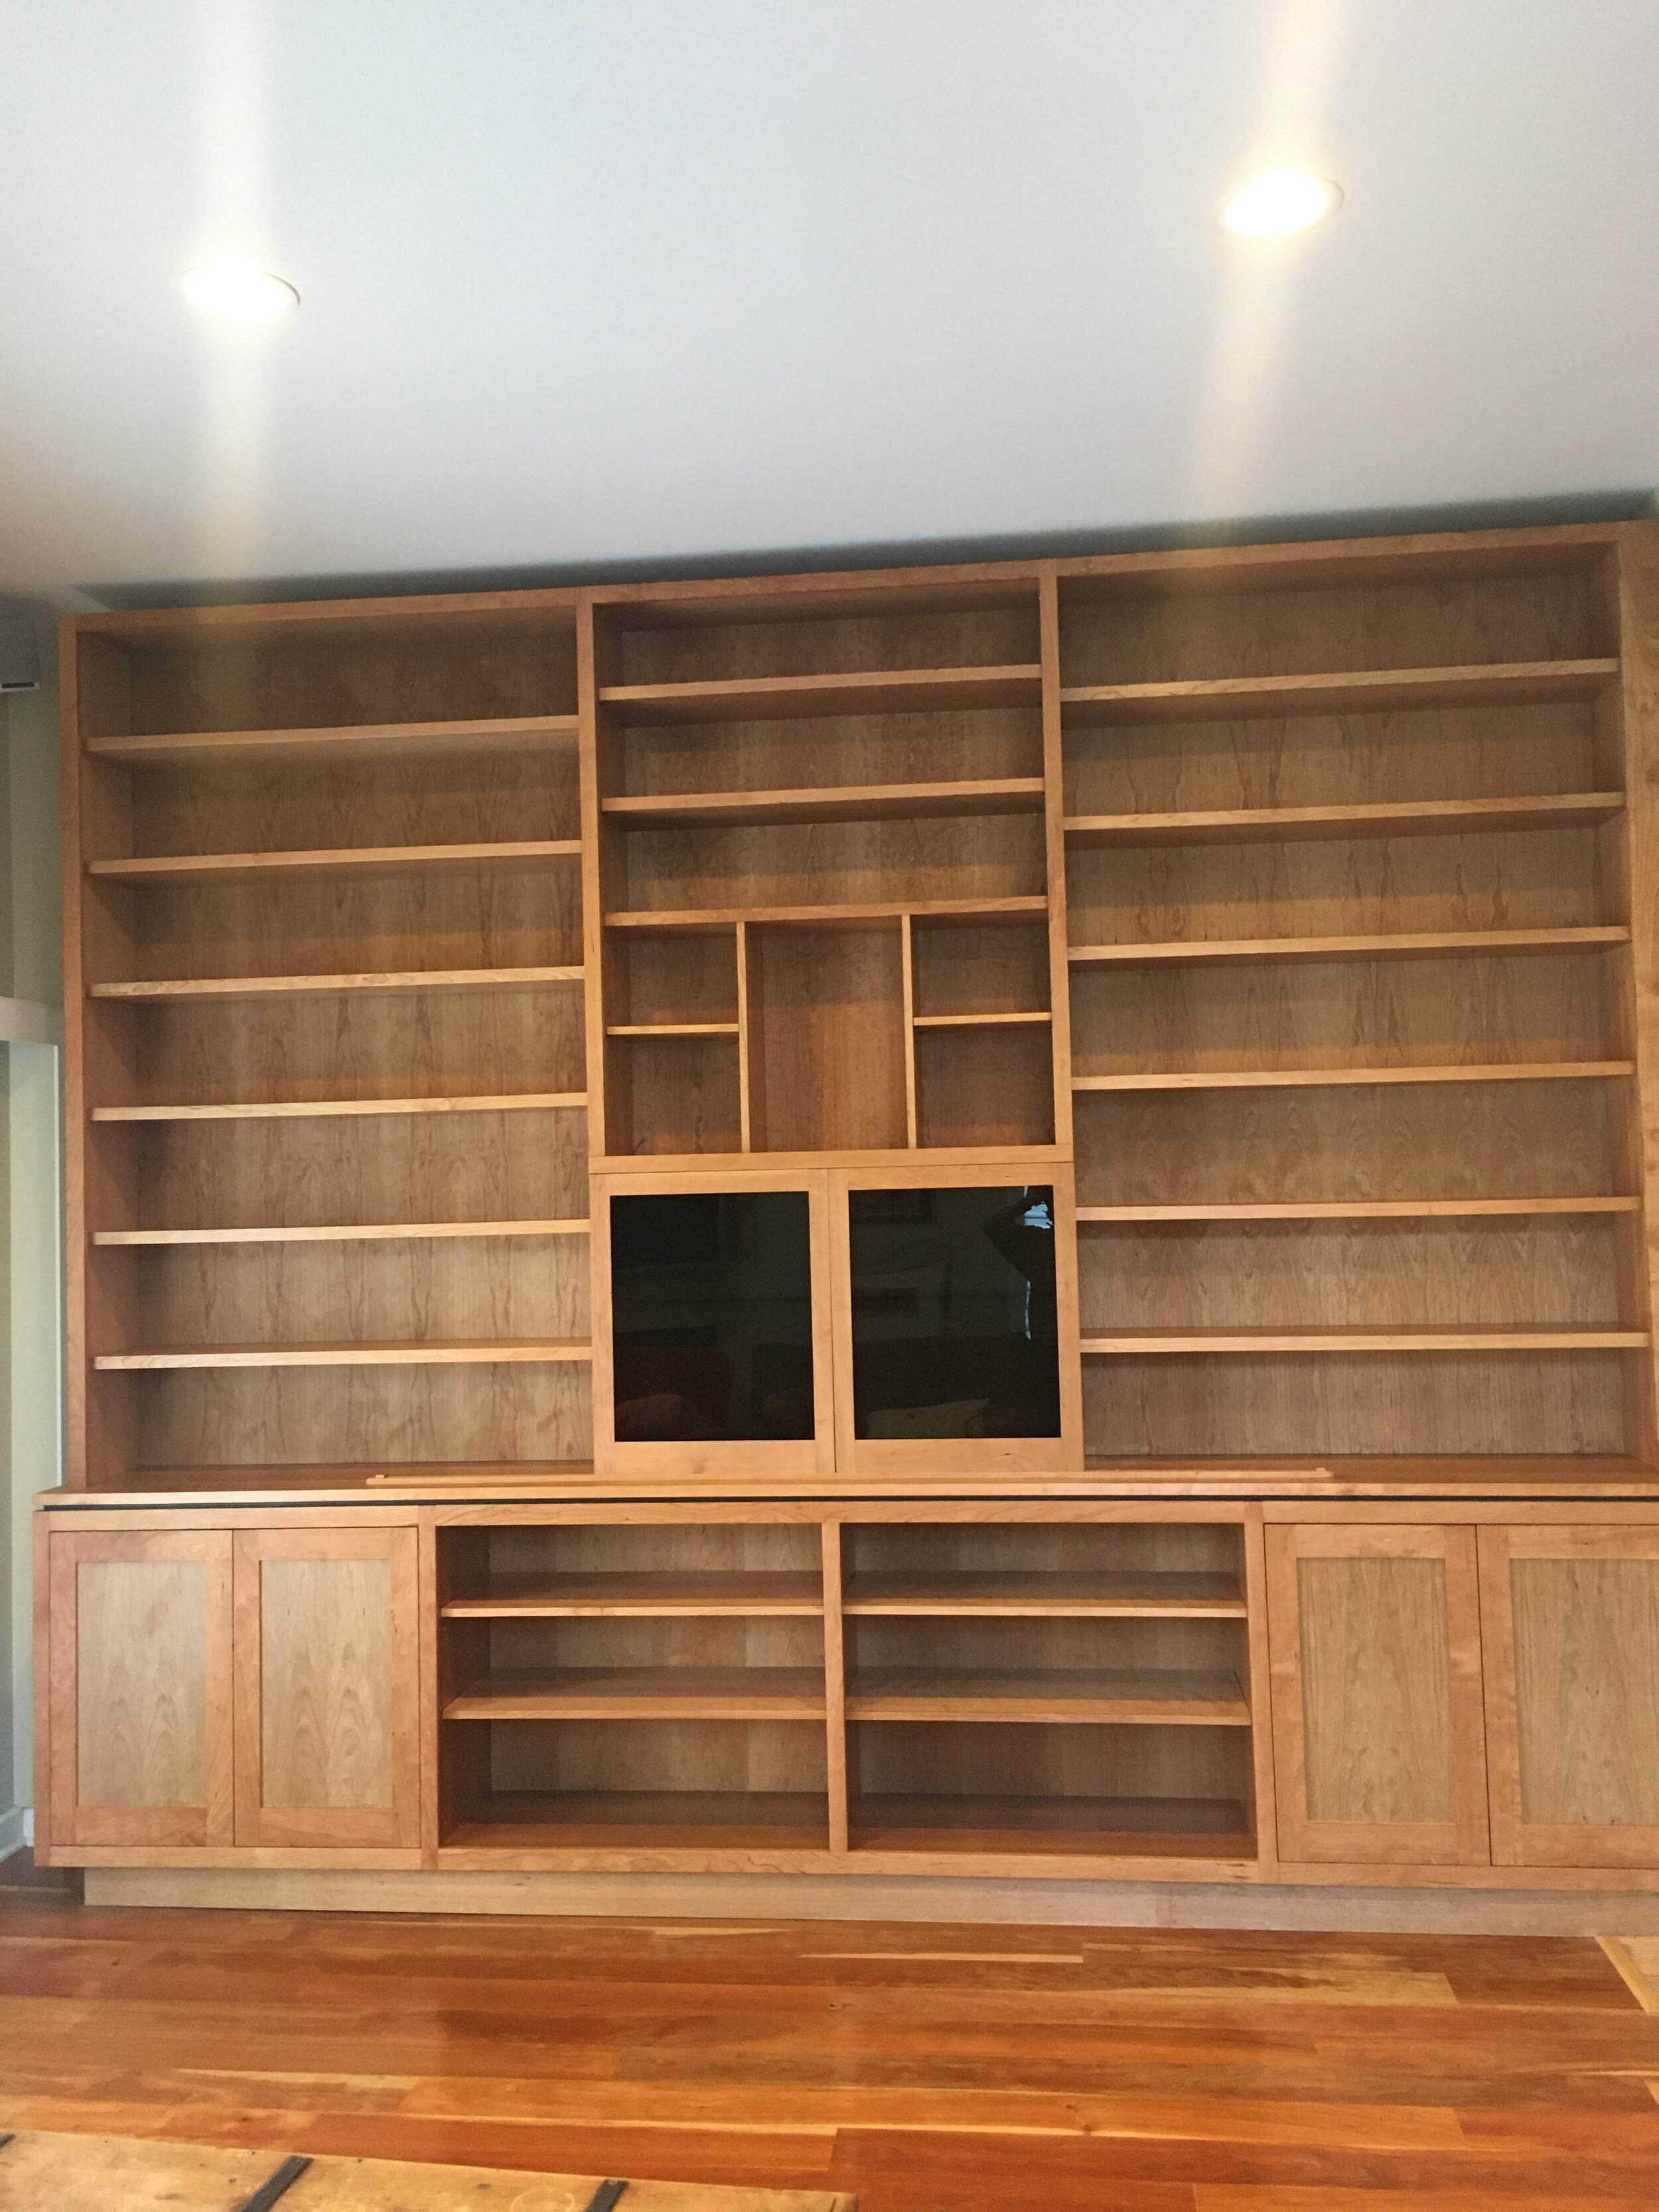 Bookshelf with Built In Bar